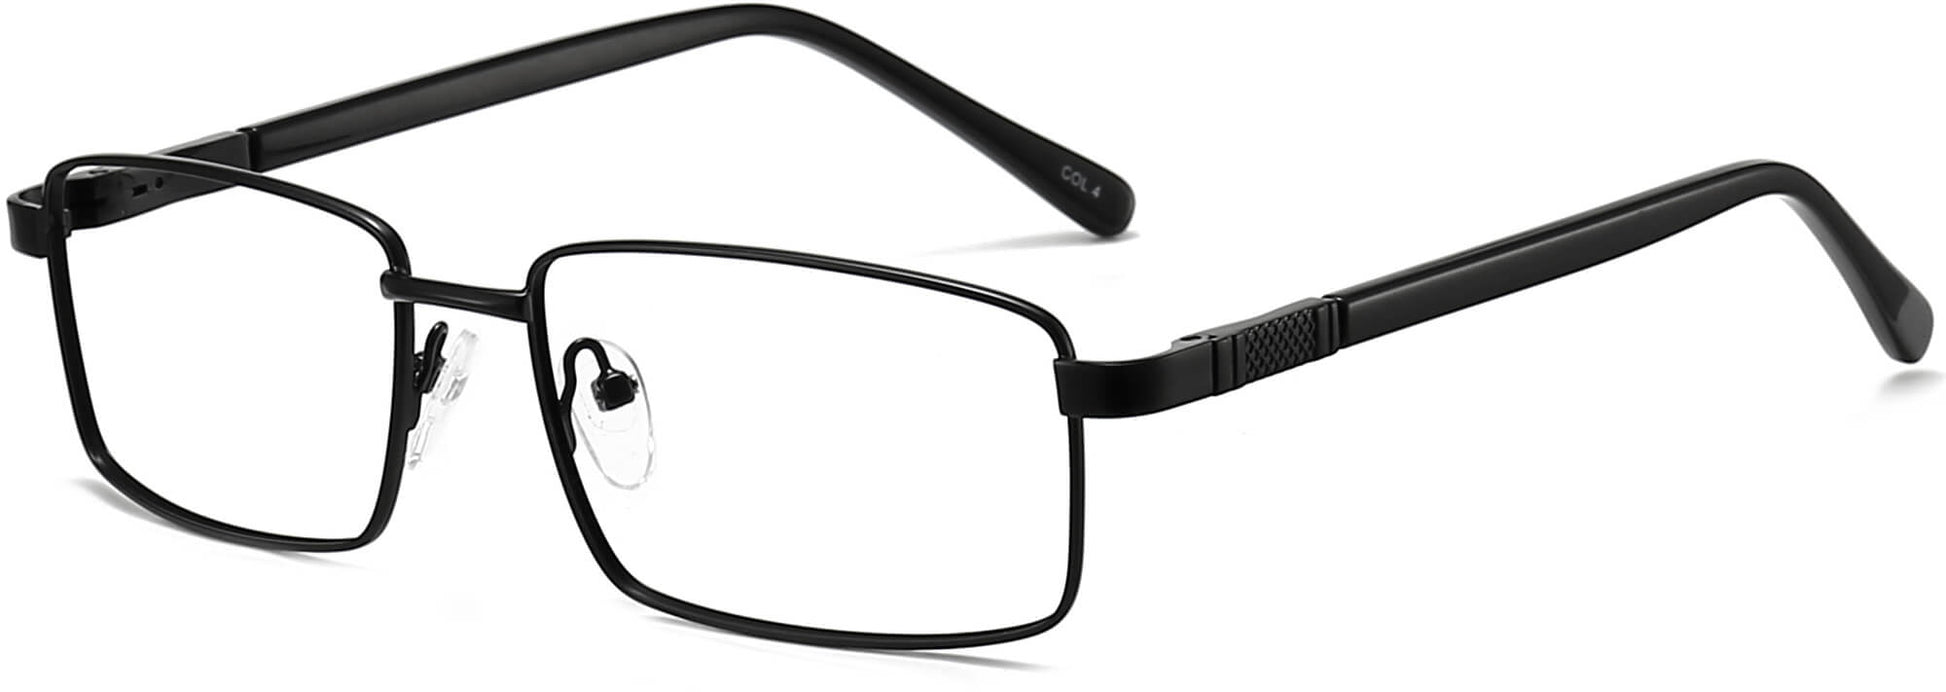 Yaretzi Square Black Eyeglasses from ANRRI, angle view